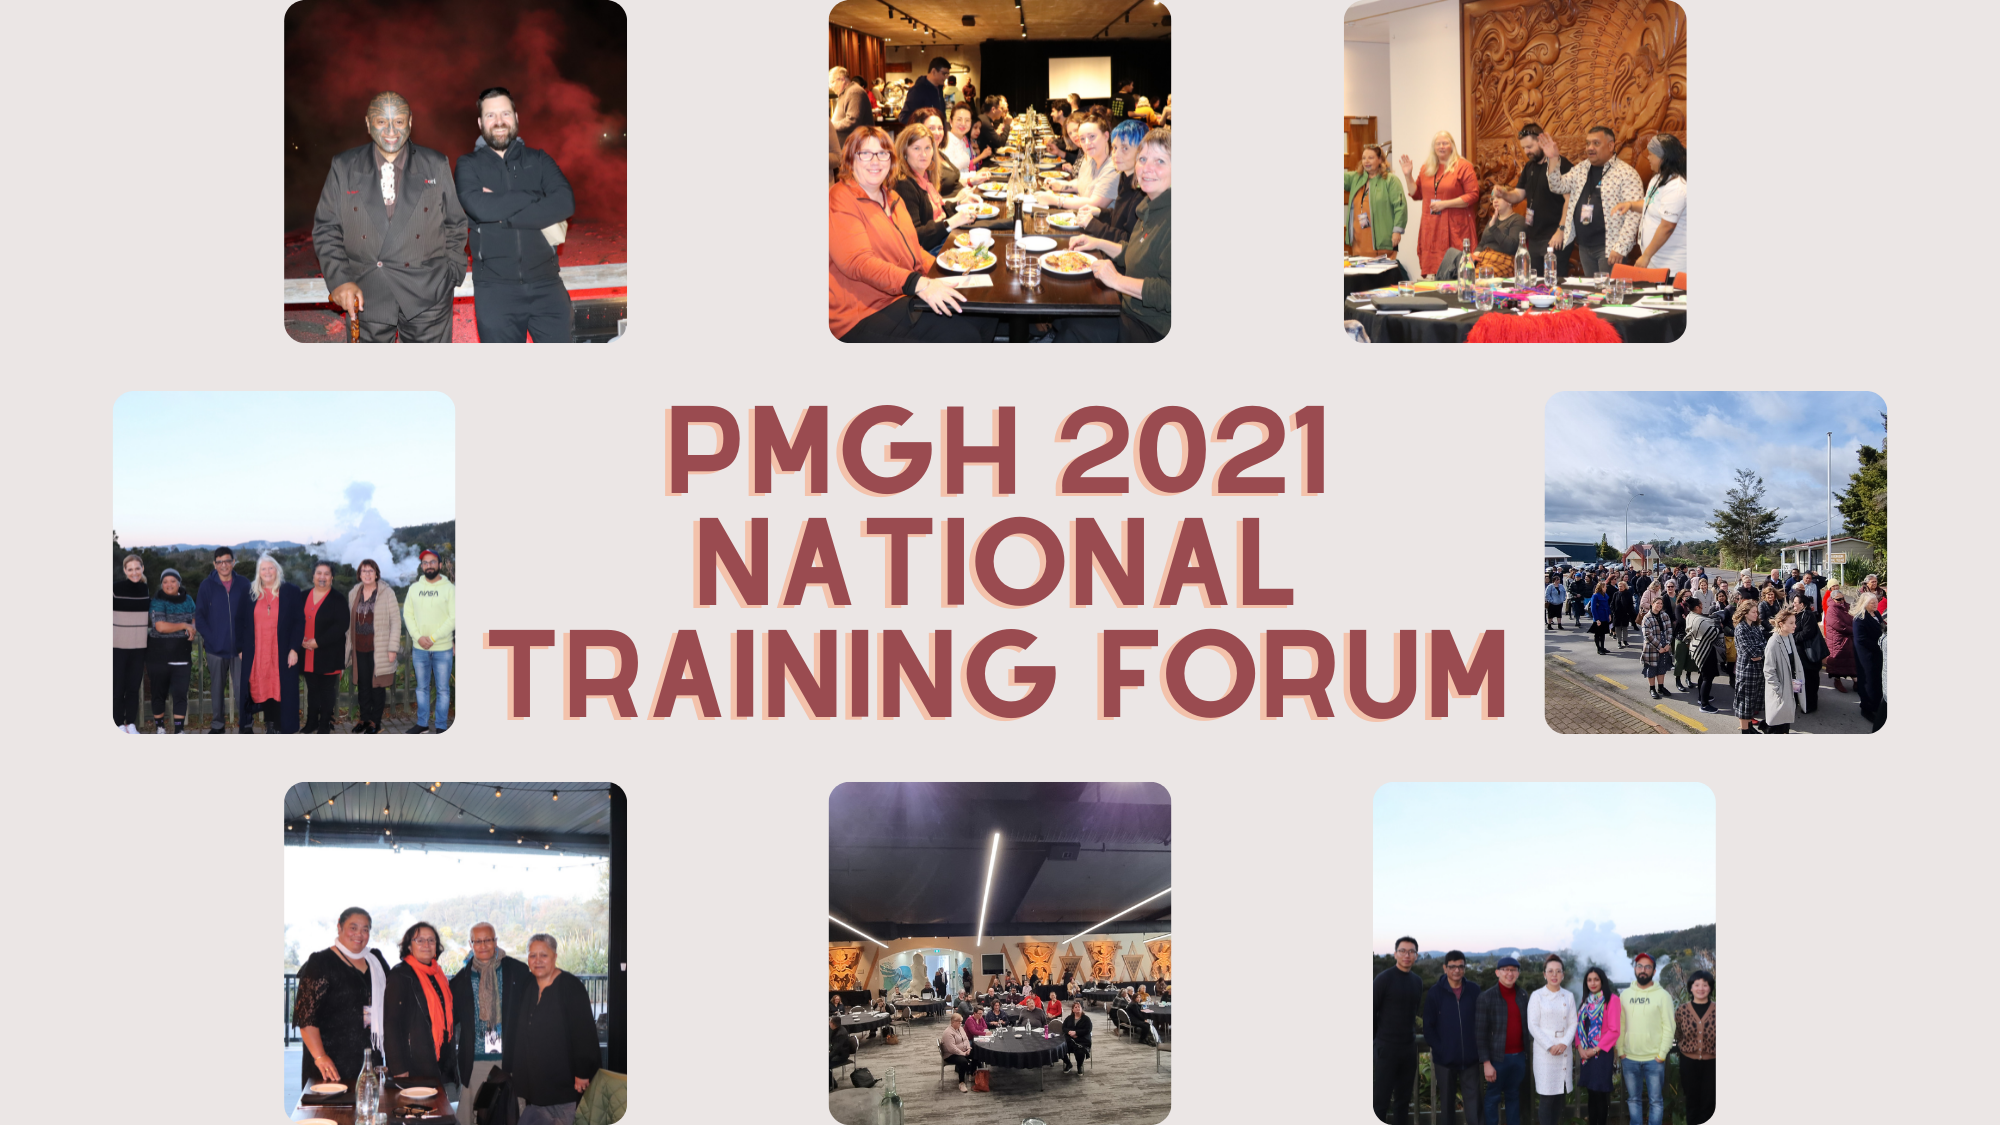 PMGH 2021 National Training Forum